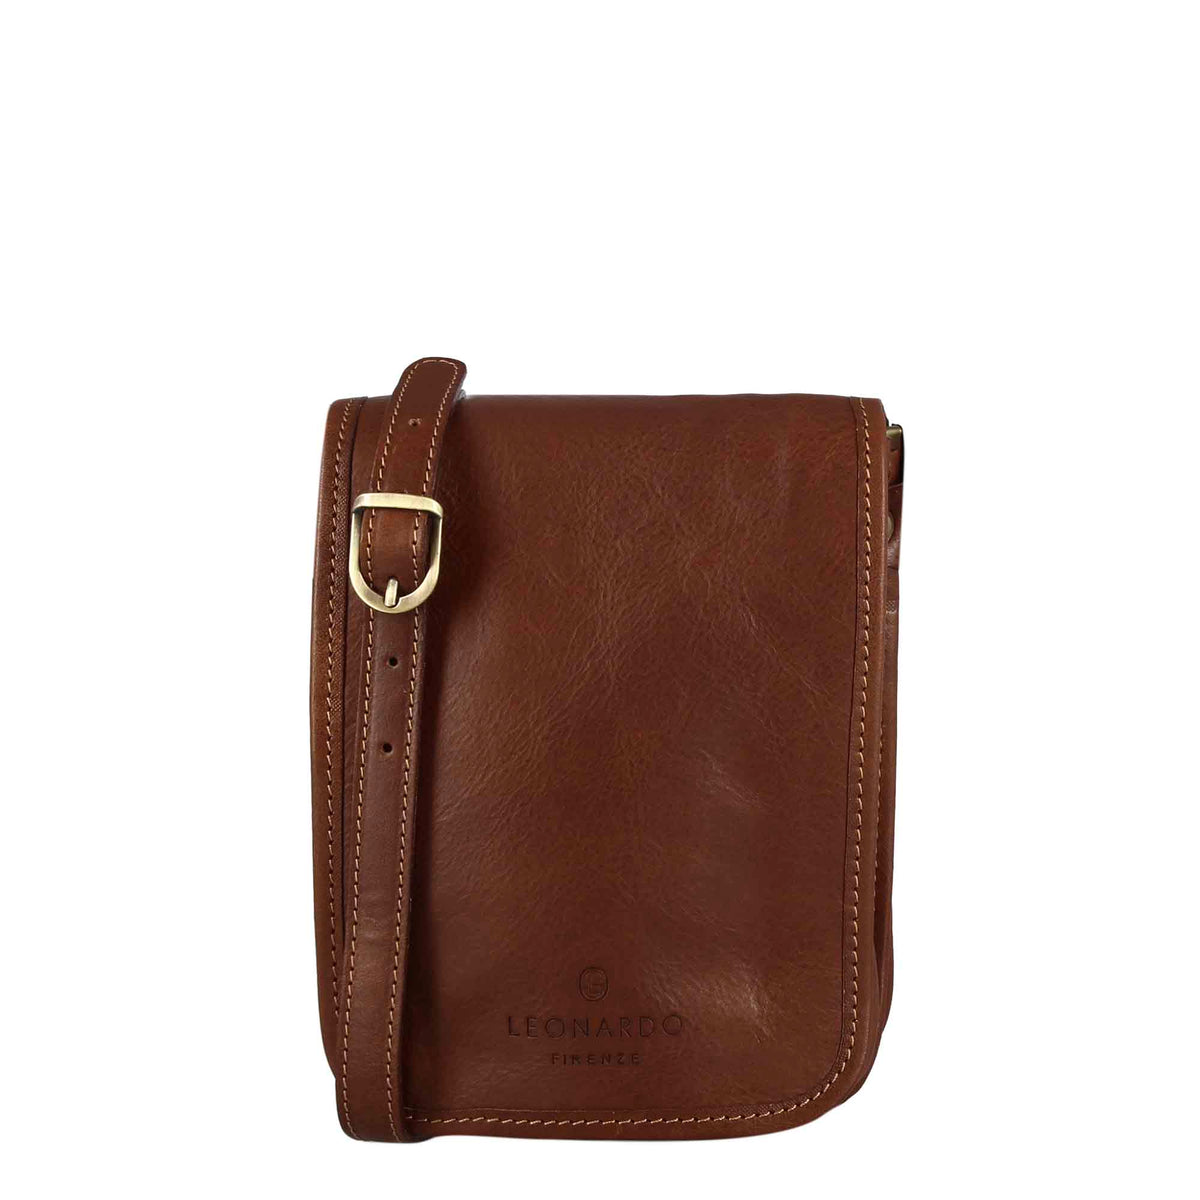 Medium brown leather men's purse